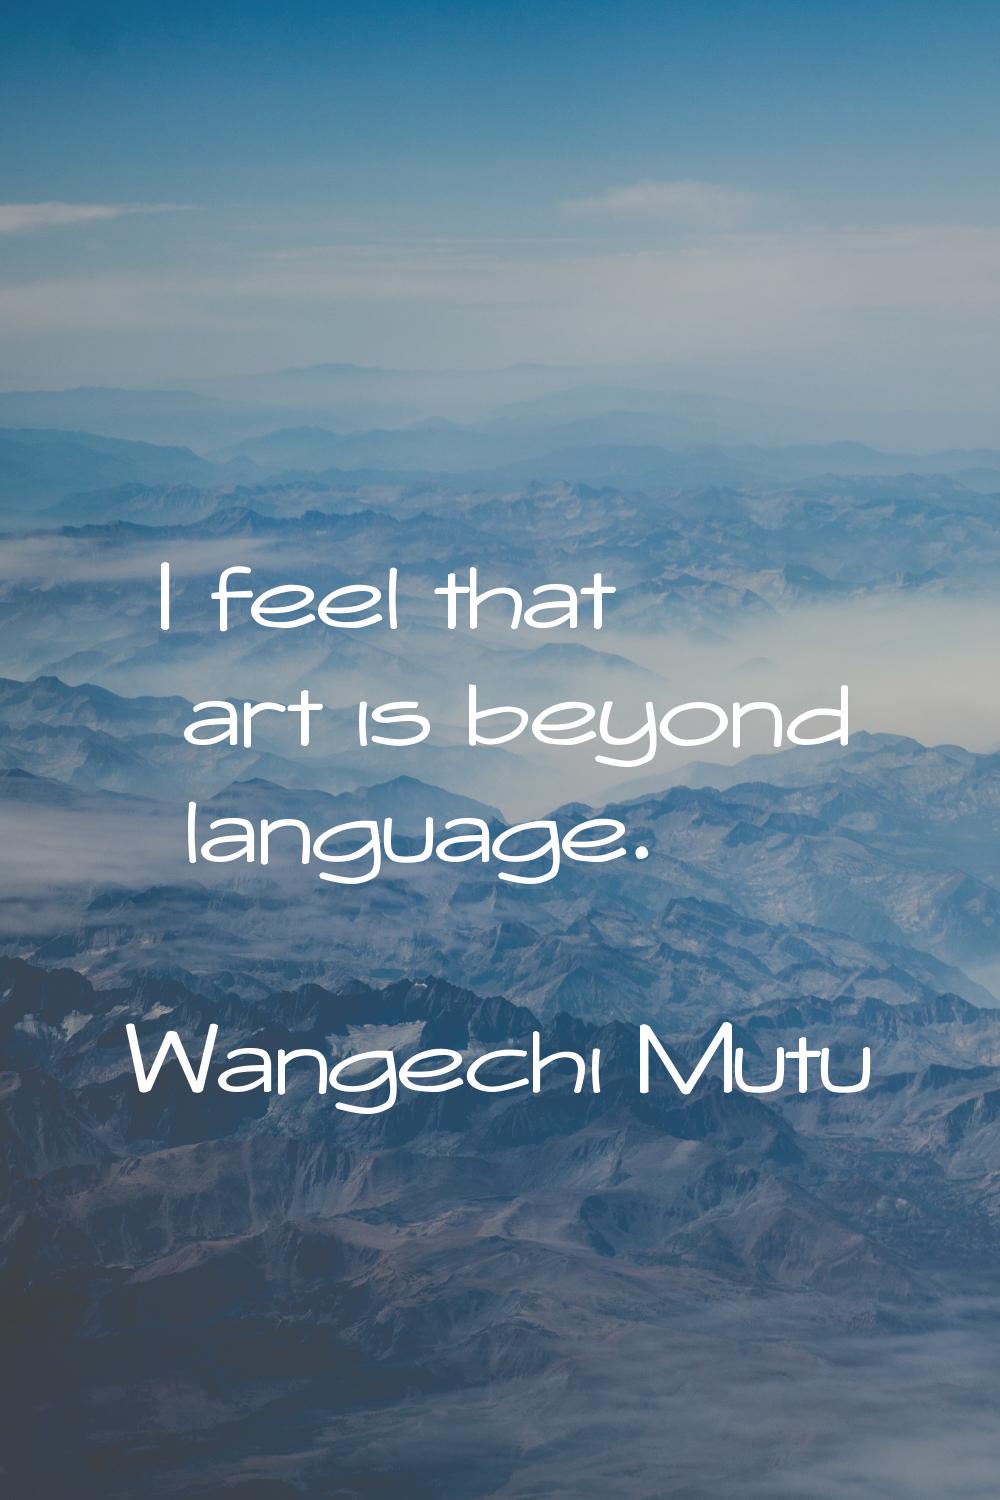 I feel that art is beyond language.